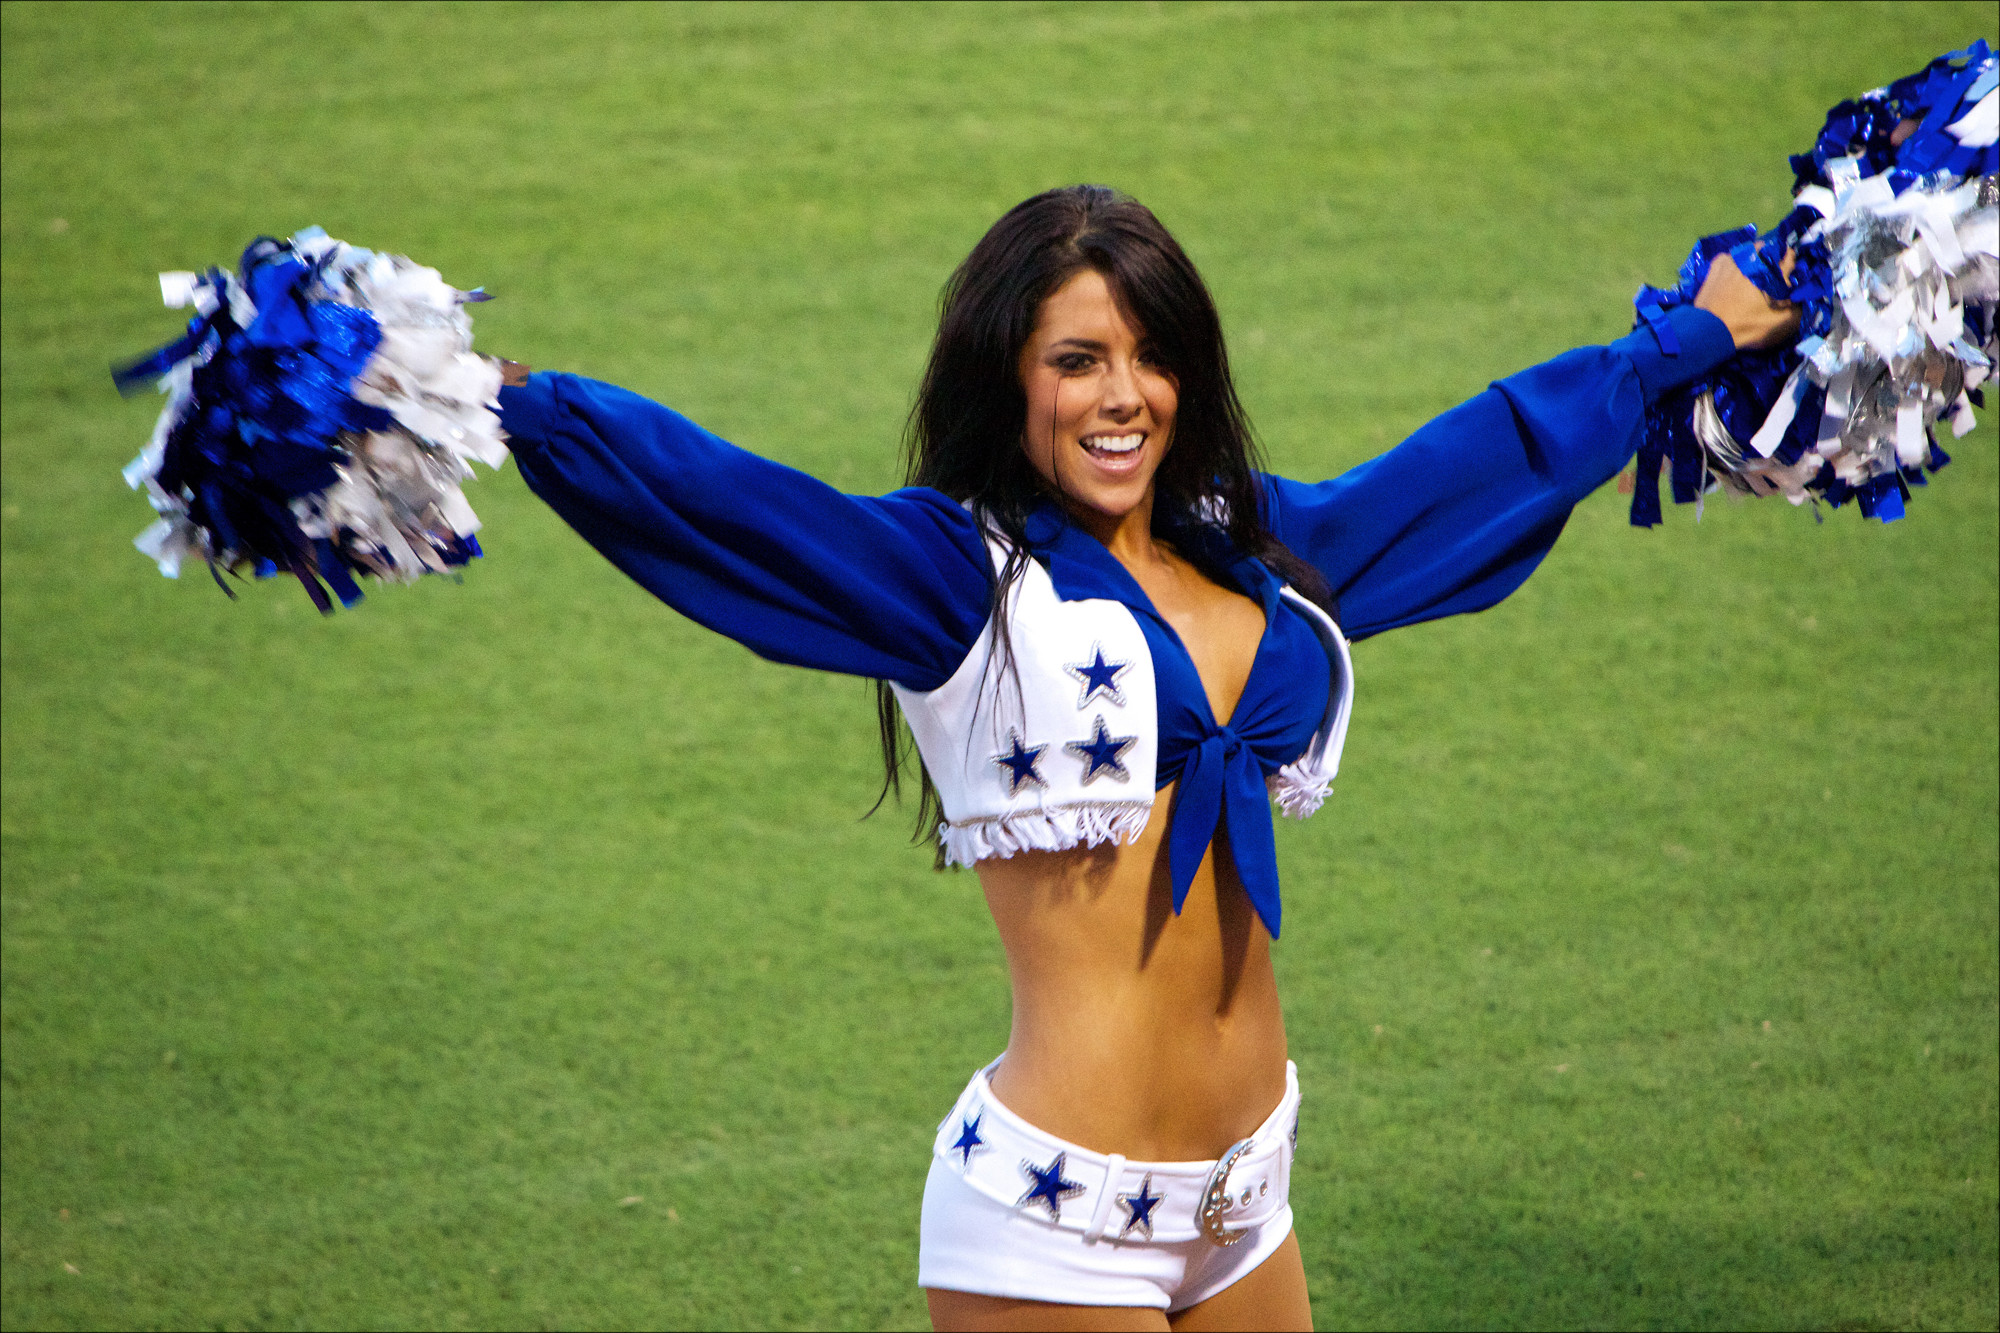 2000x1333 File:Dallas Cowboys Cheerleaders - IV.jpg - Wikimedia Commons